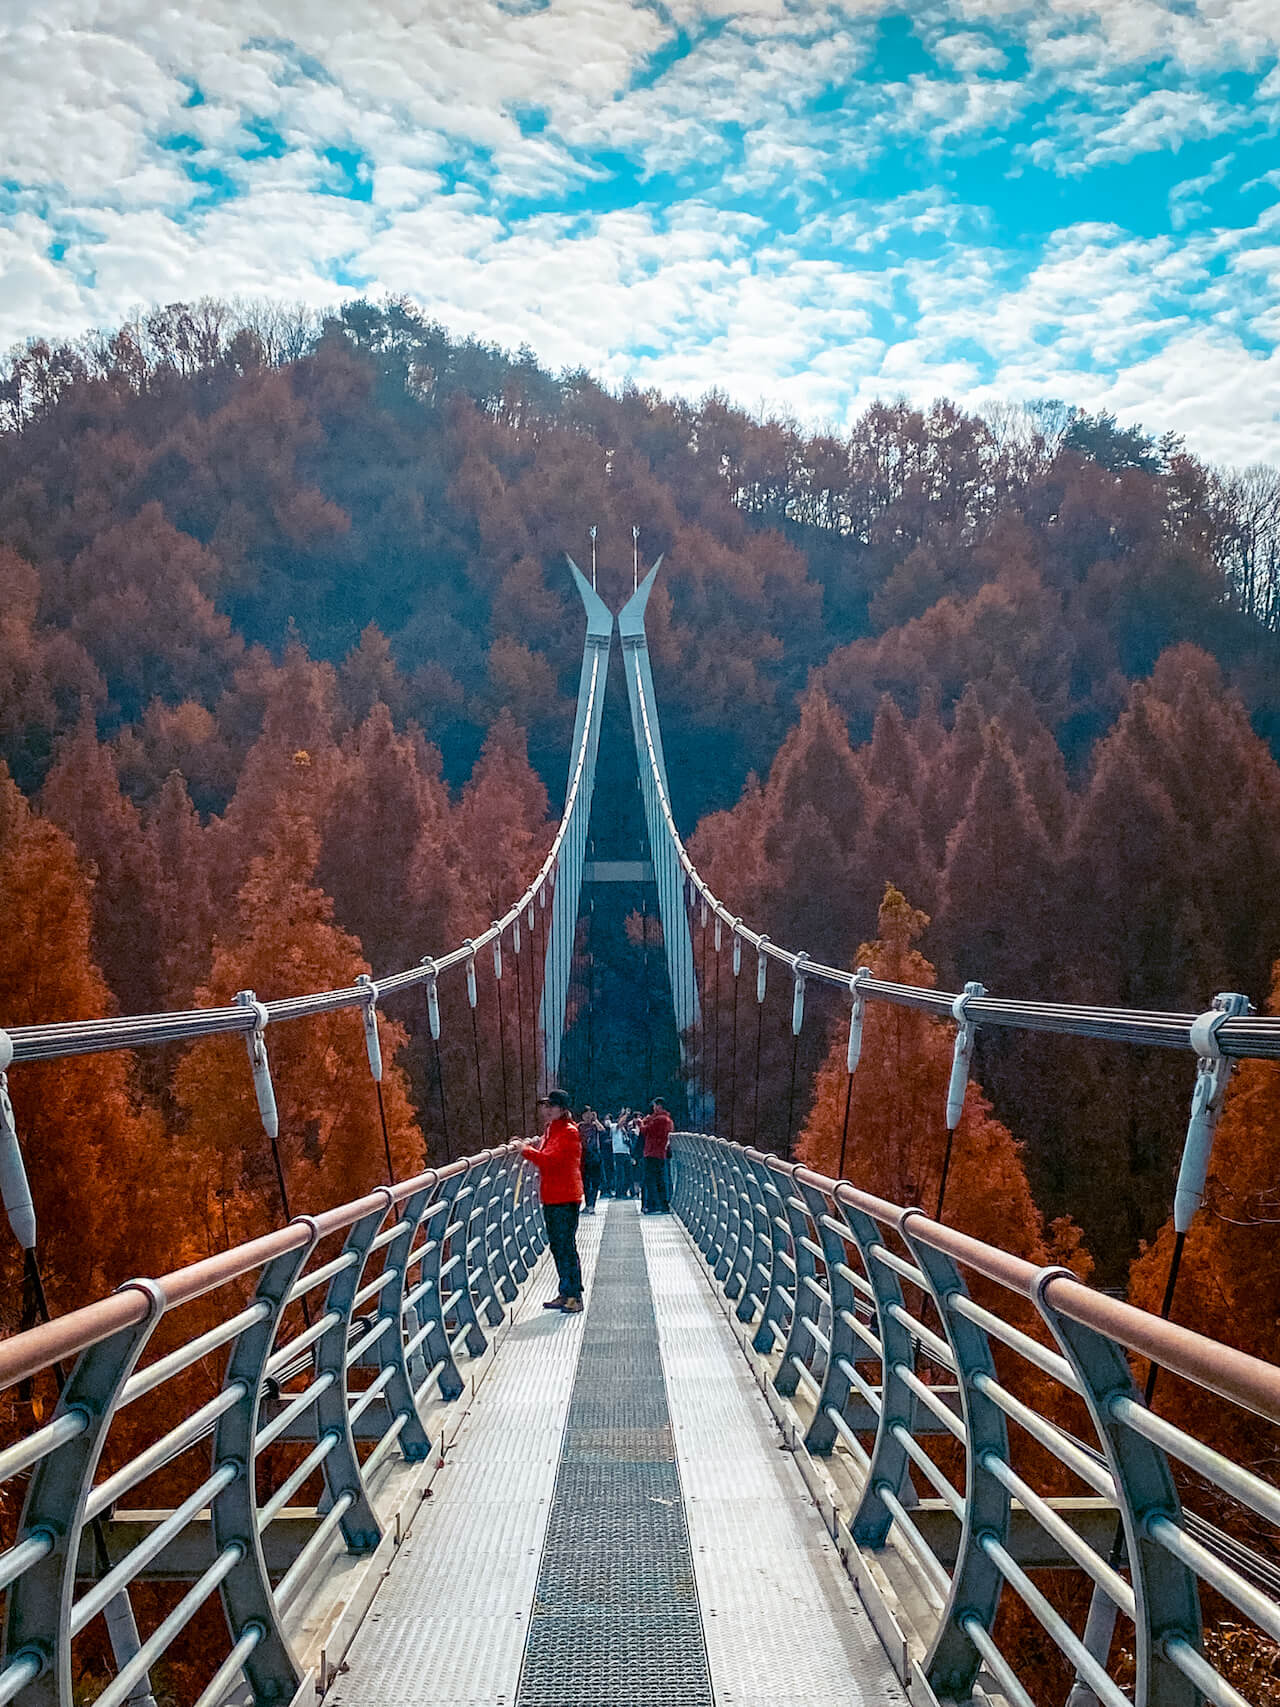 jangtaesan forest | suspension bridge in autumn